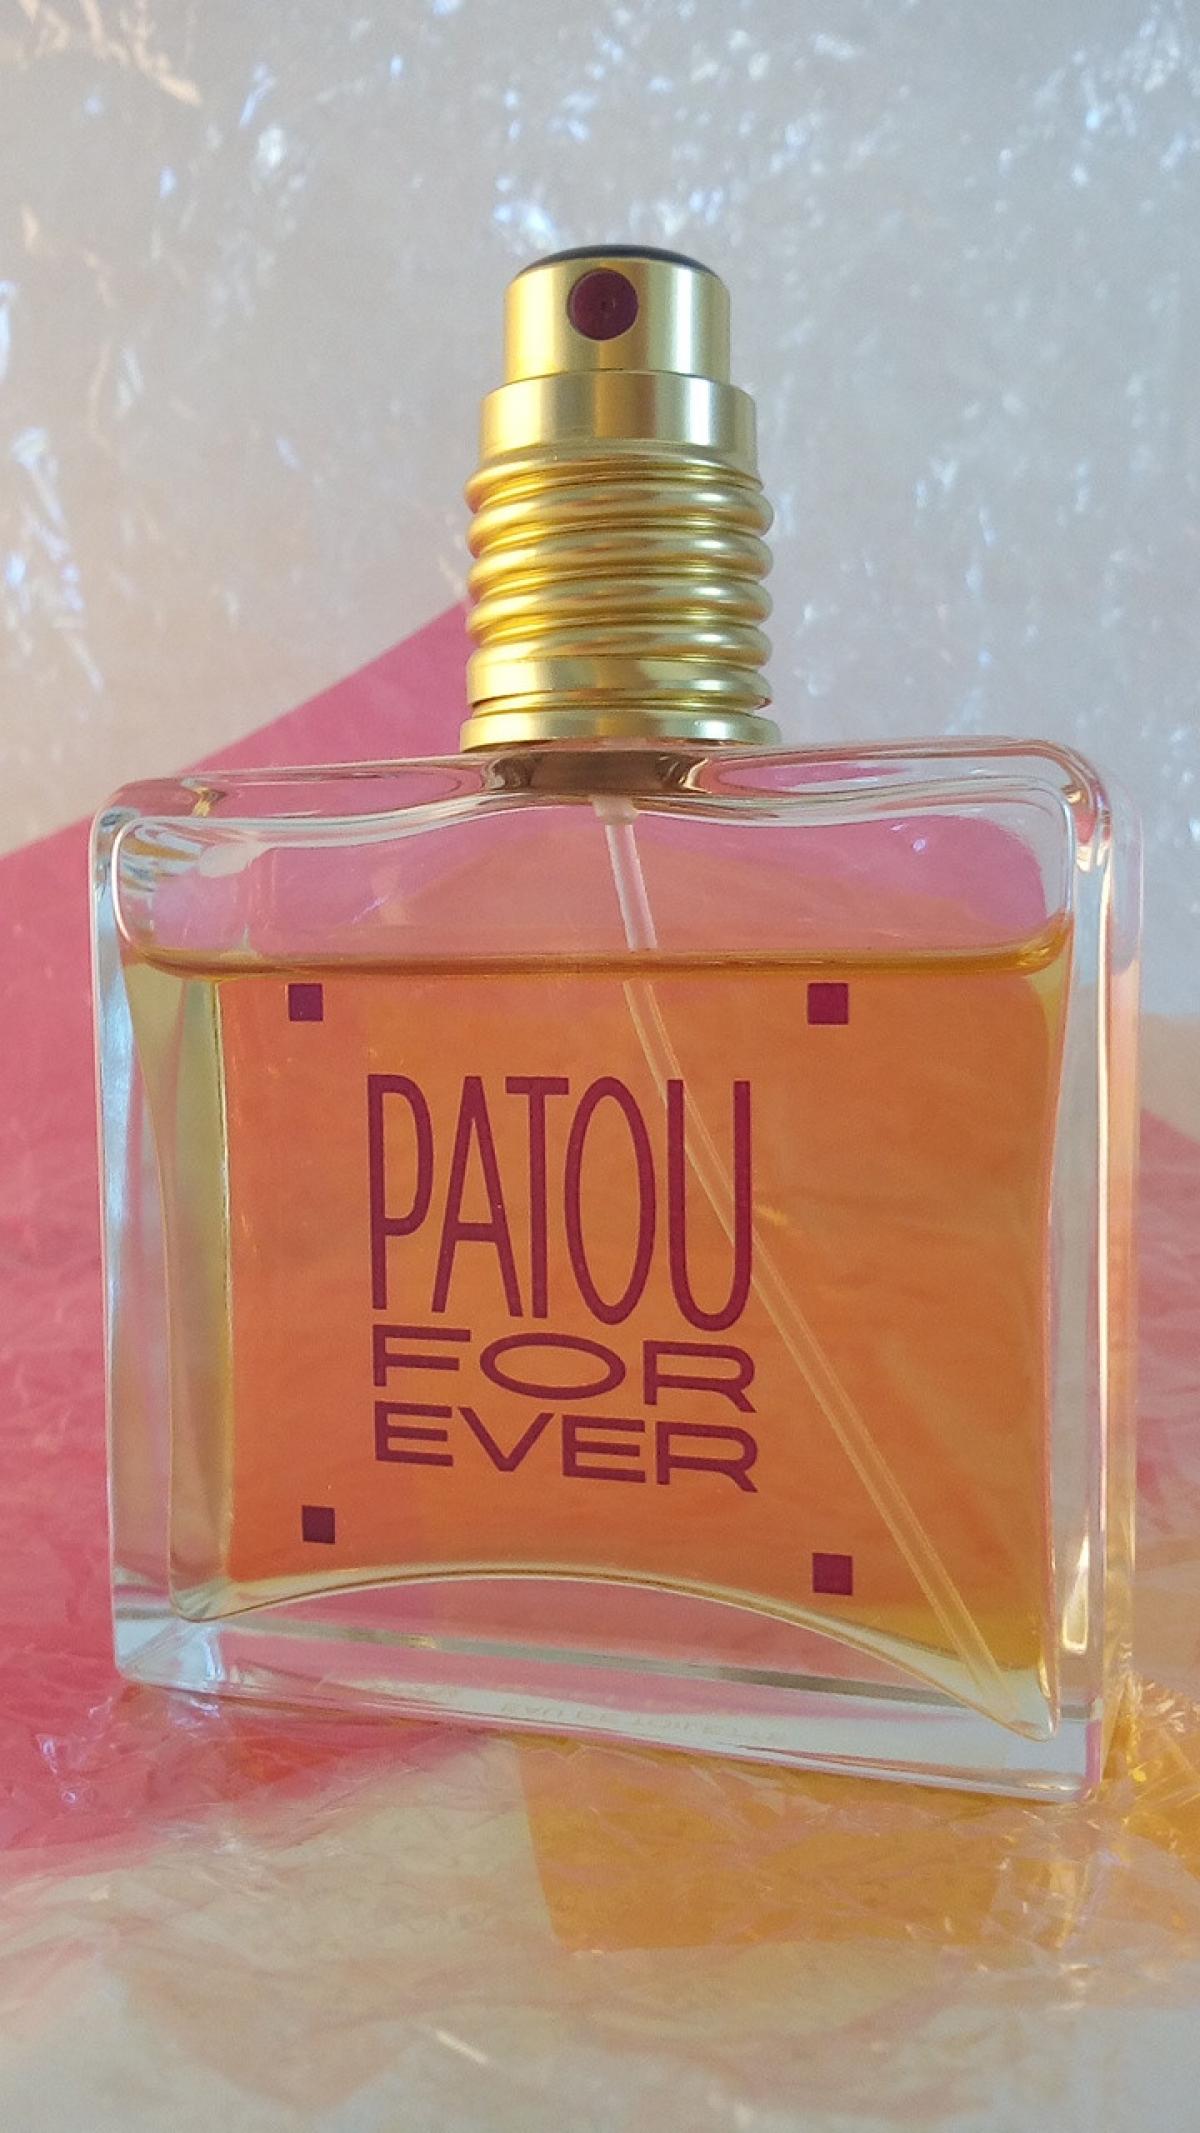 Patou For Ever Jean Patou perfume - a fragrância Feminino 1998